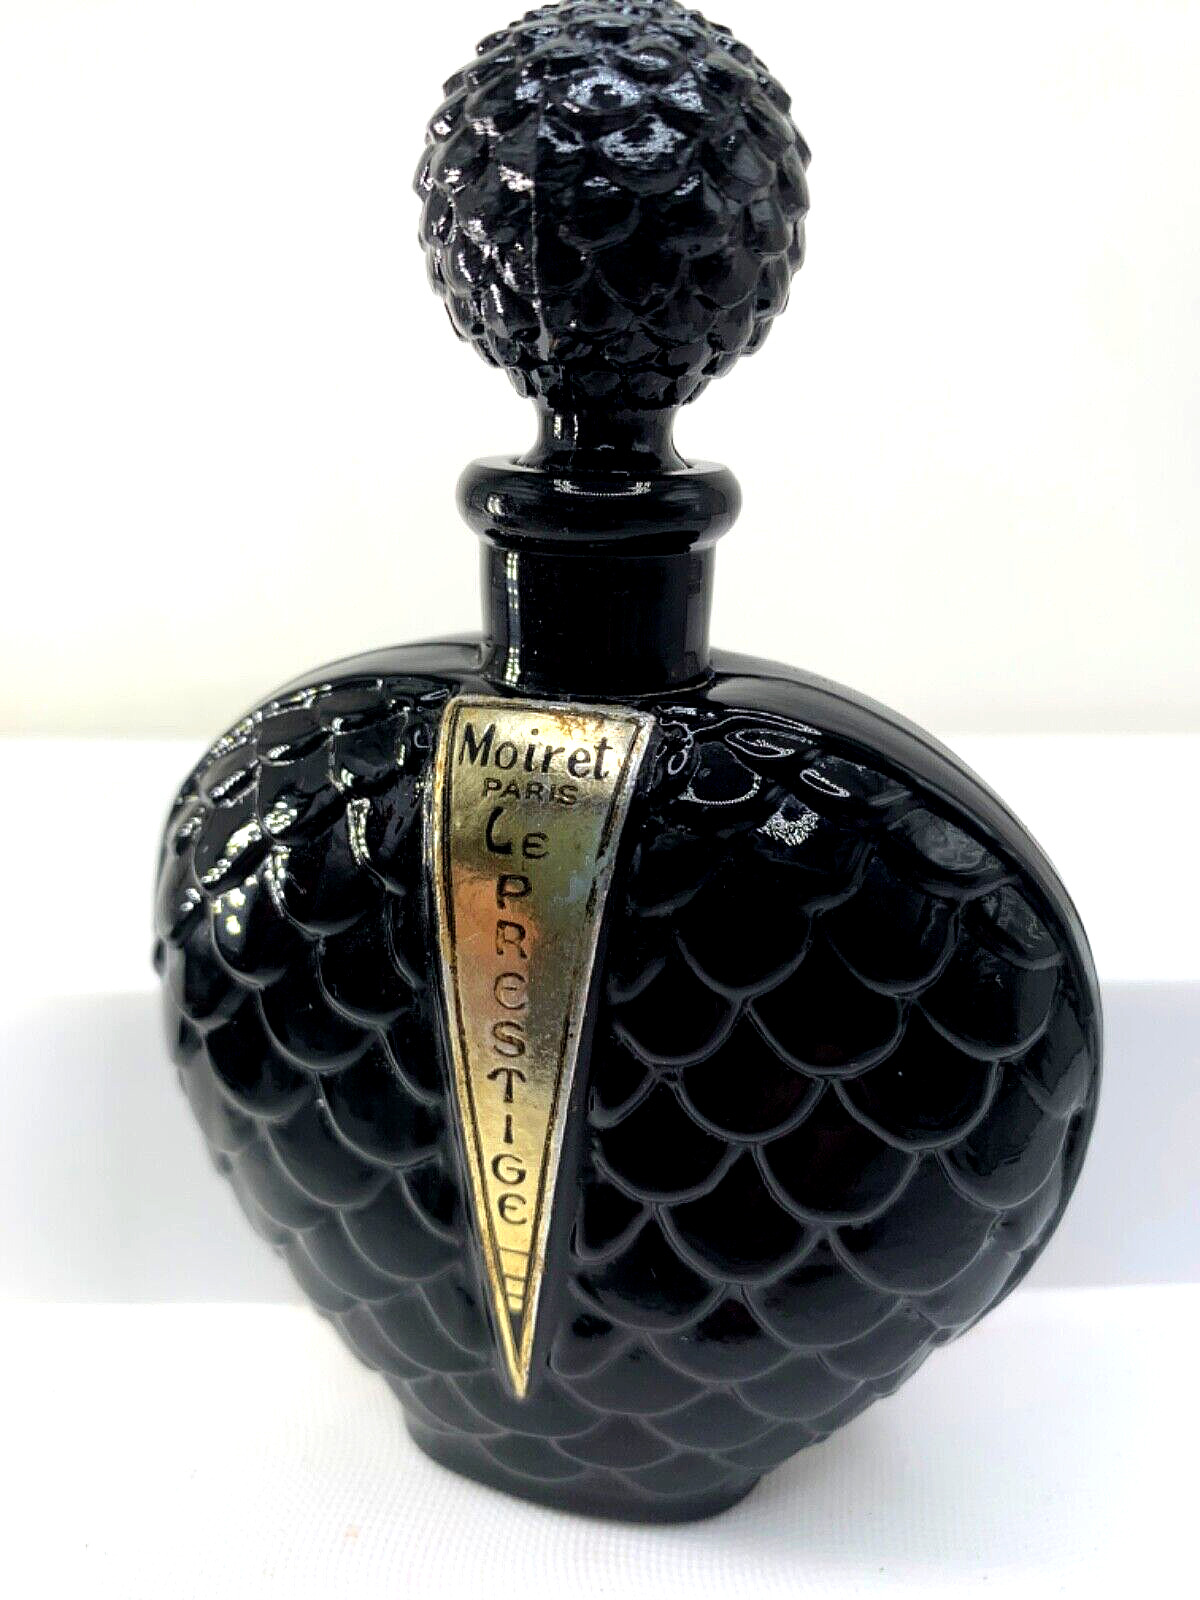 Stunning   Vintage black perfume bottle.  Le Prestige by Moiret.  1930.